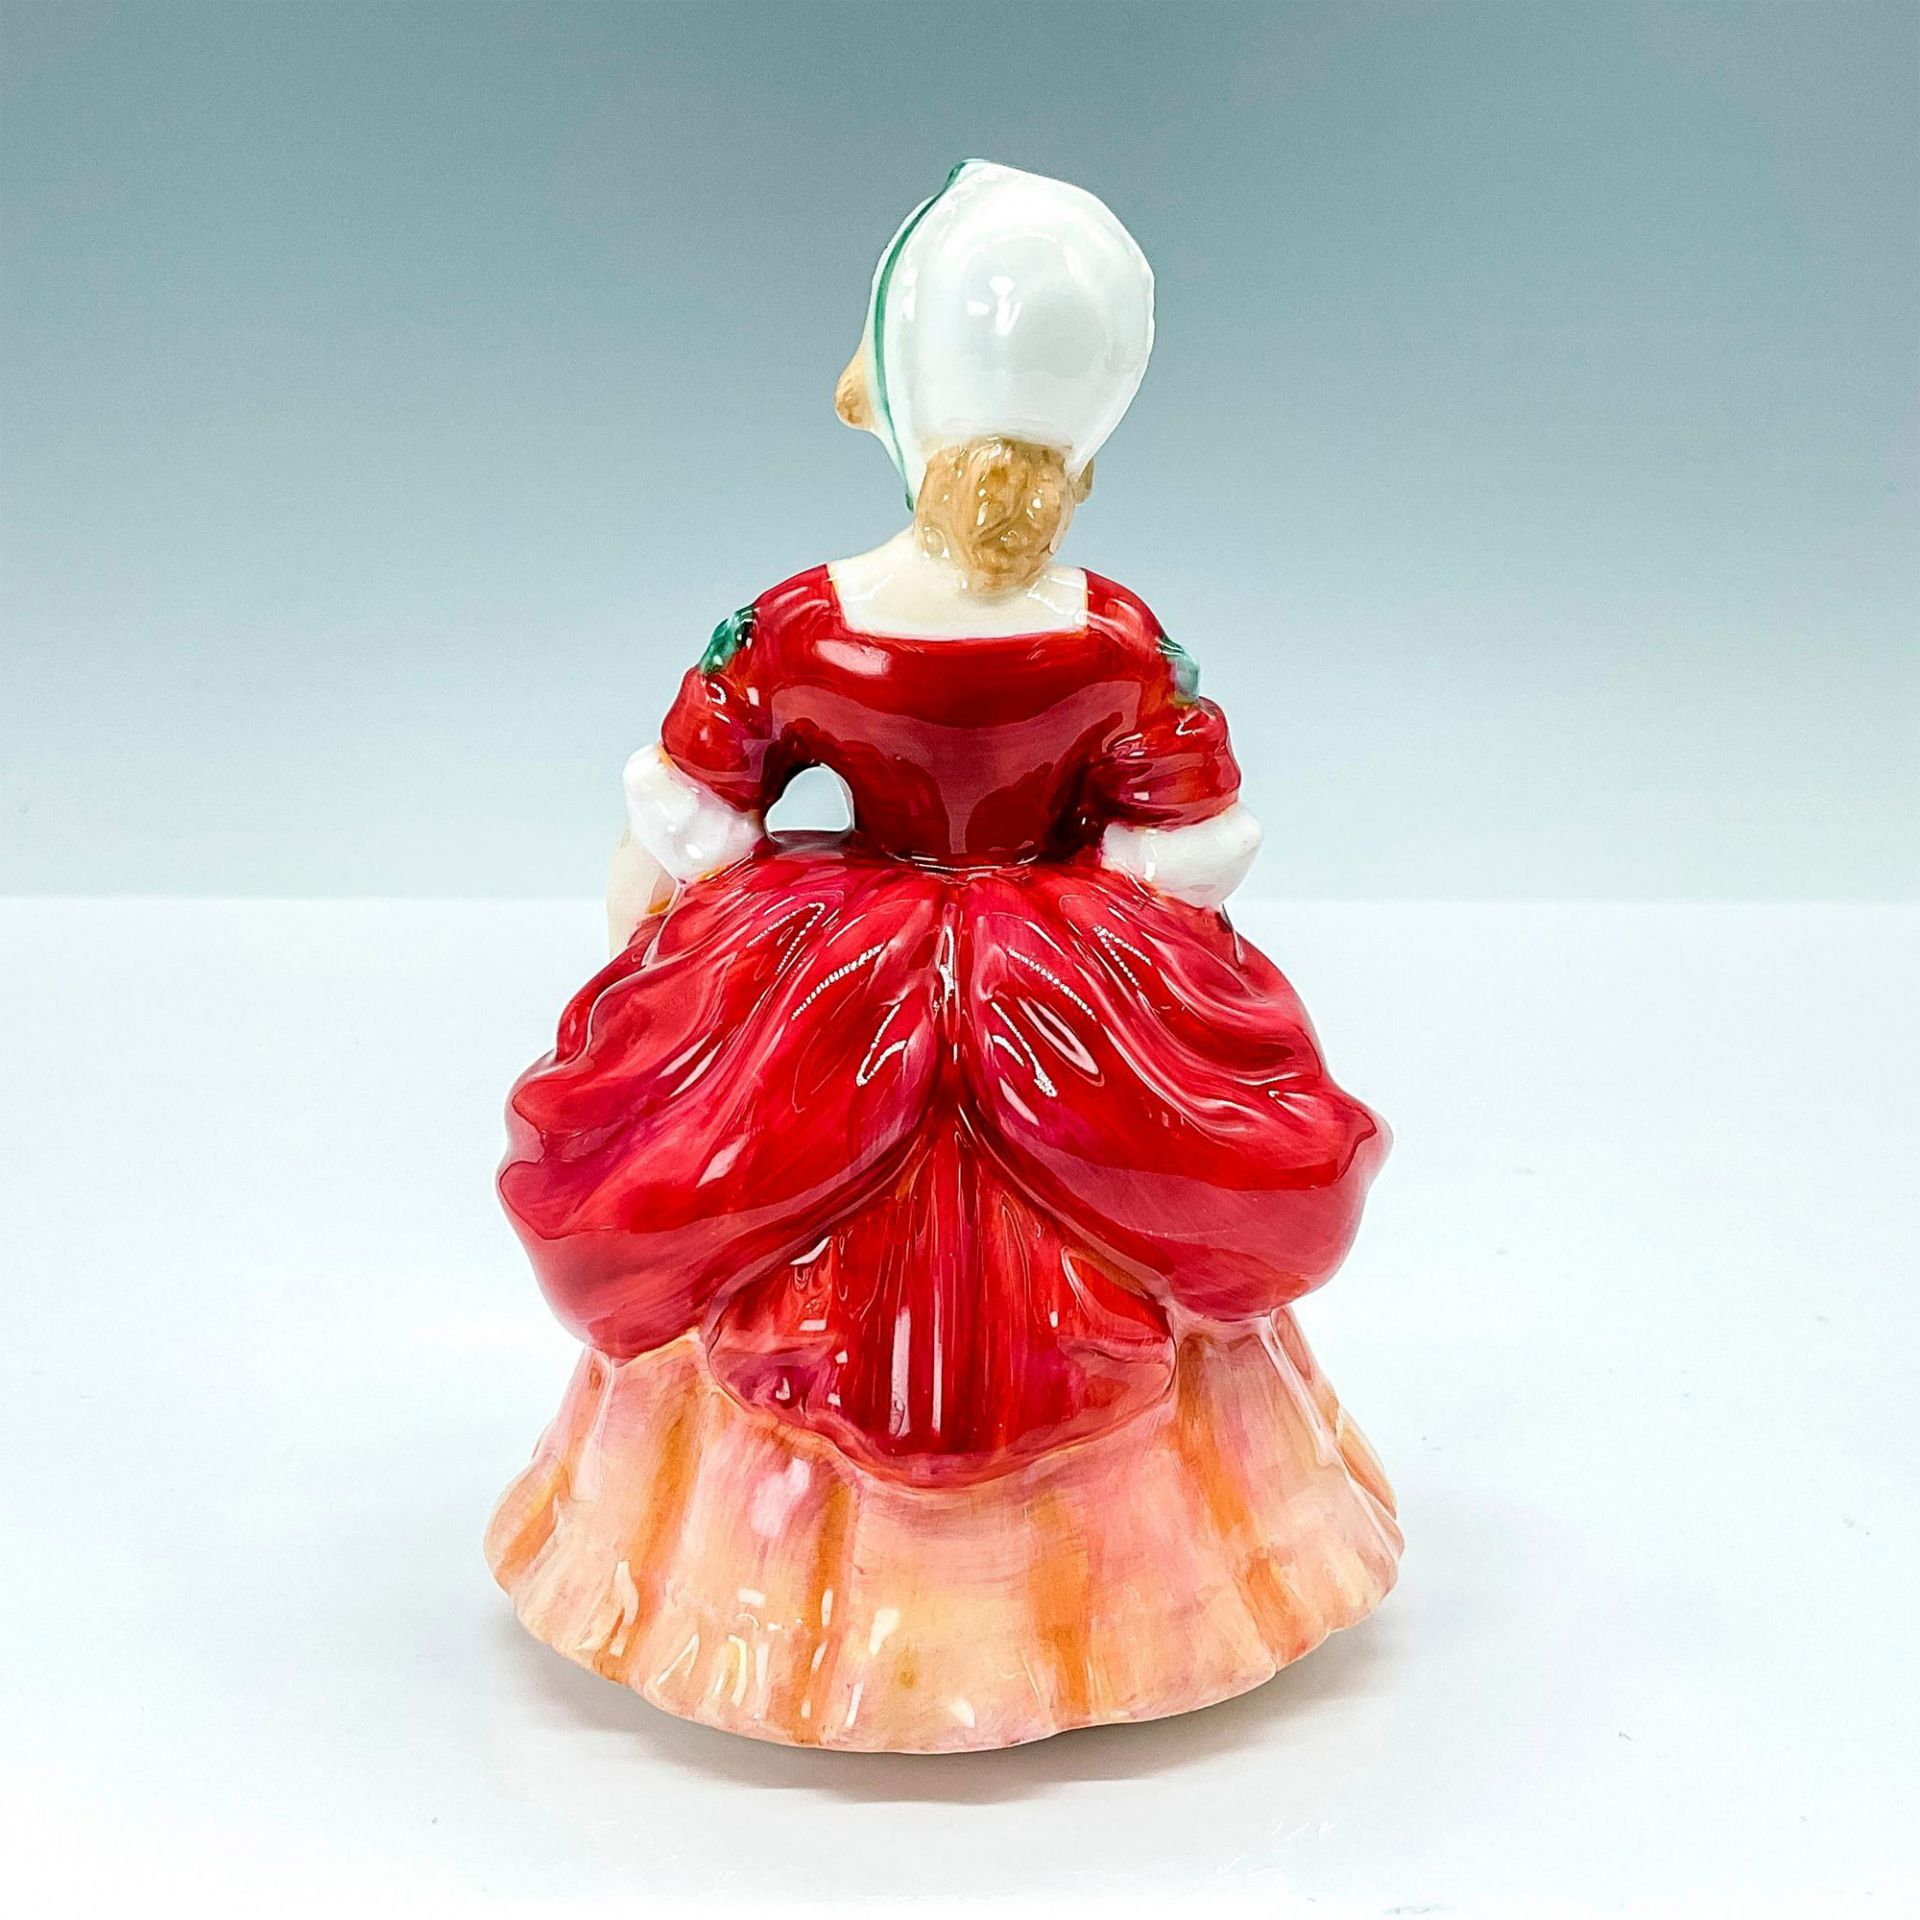 Valerie - HN2107 - Royal Doulton Figurine - Image 2 of 3